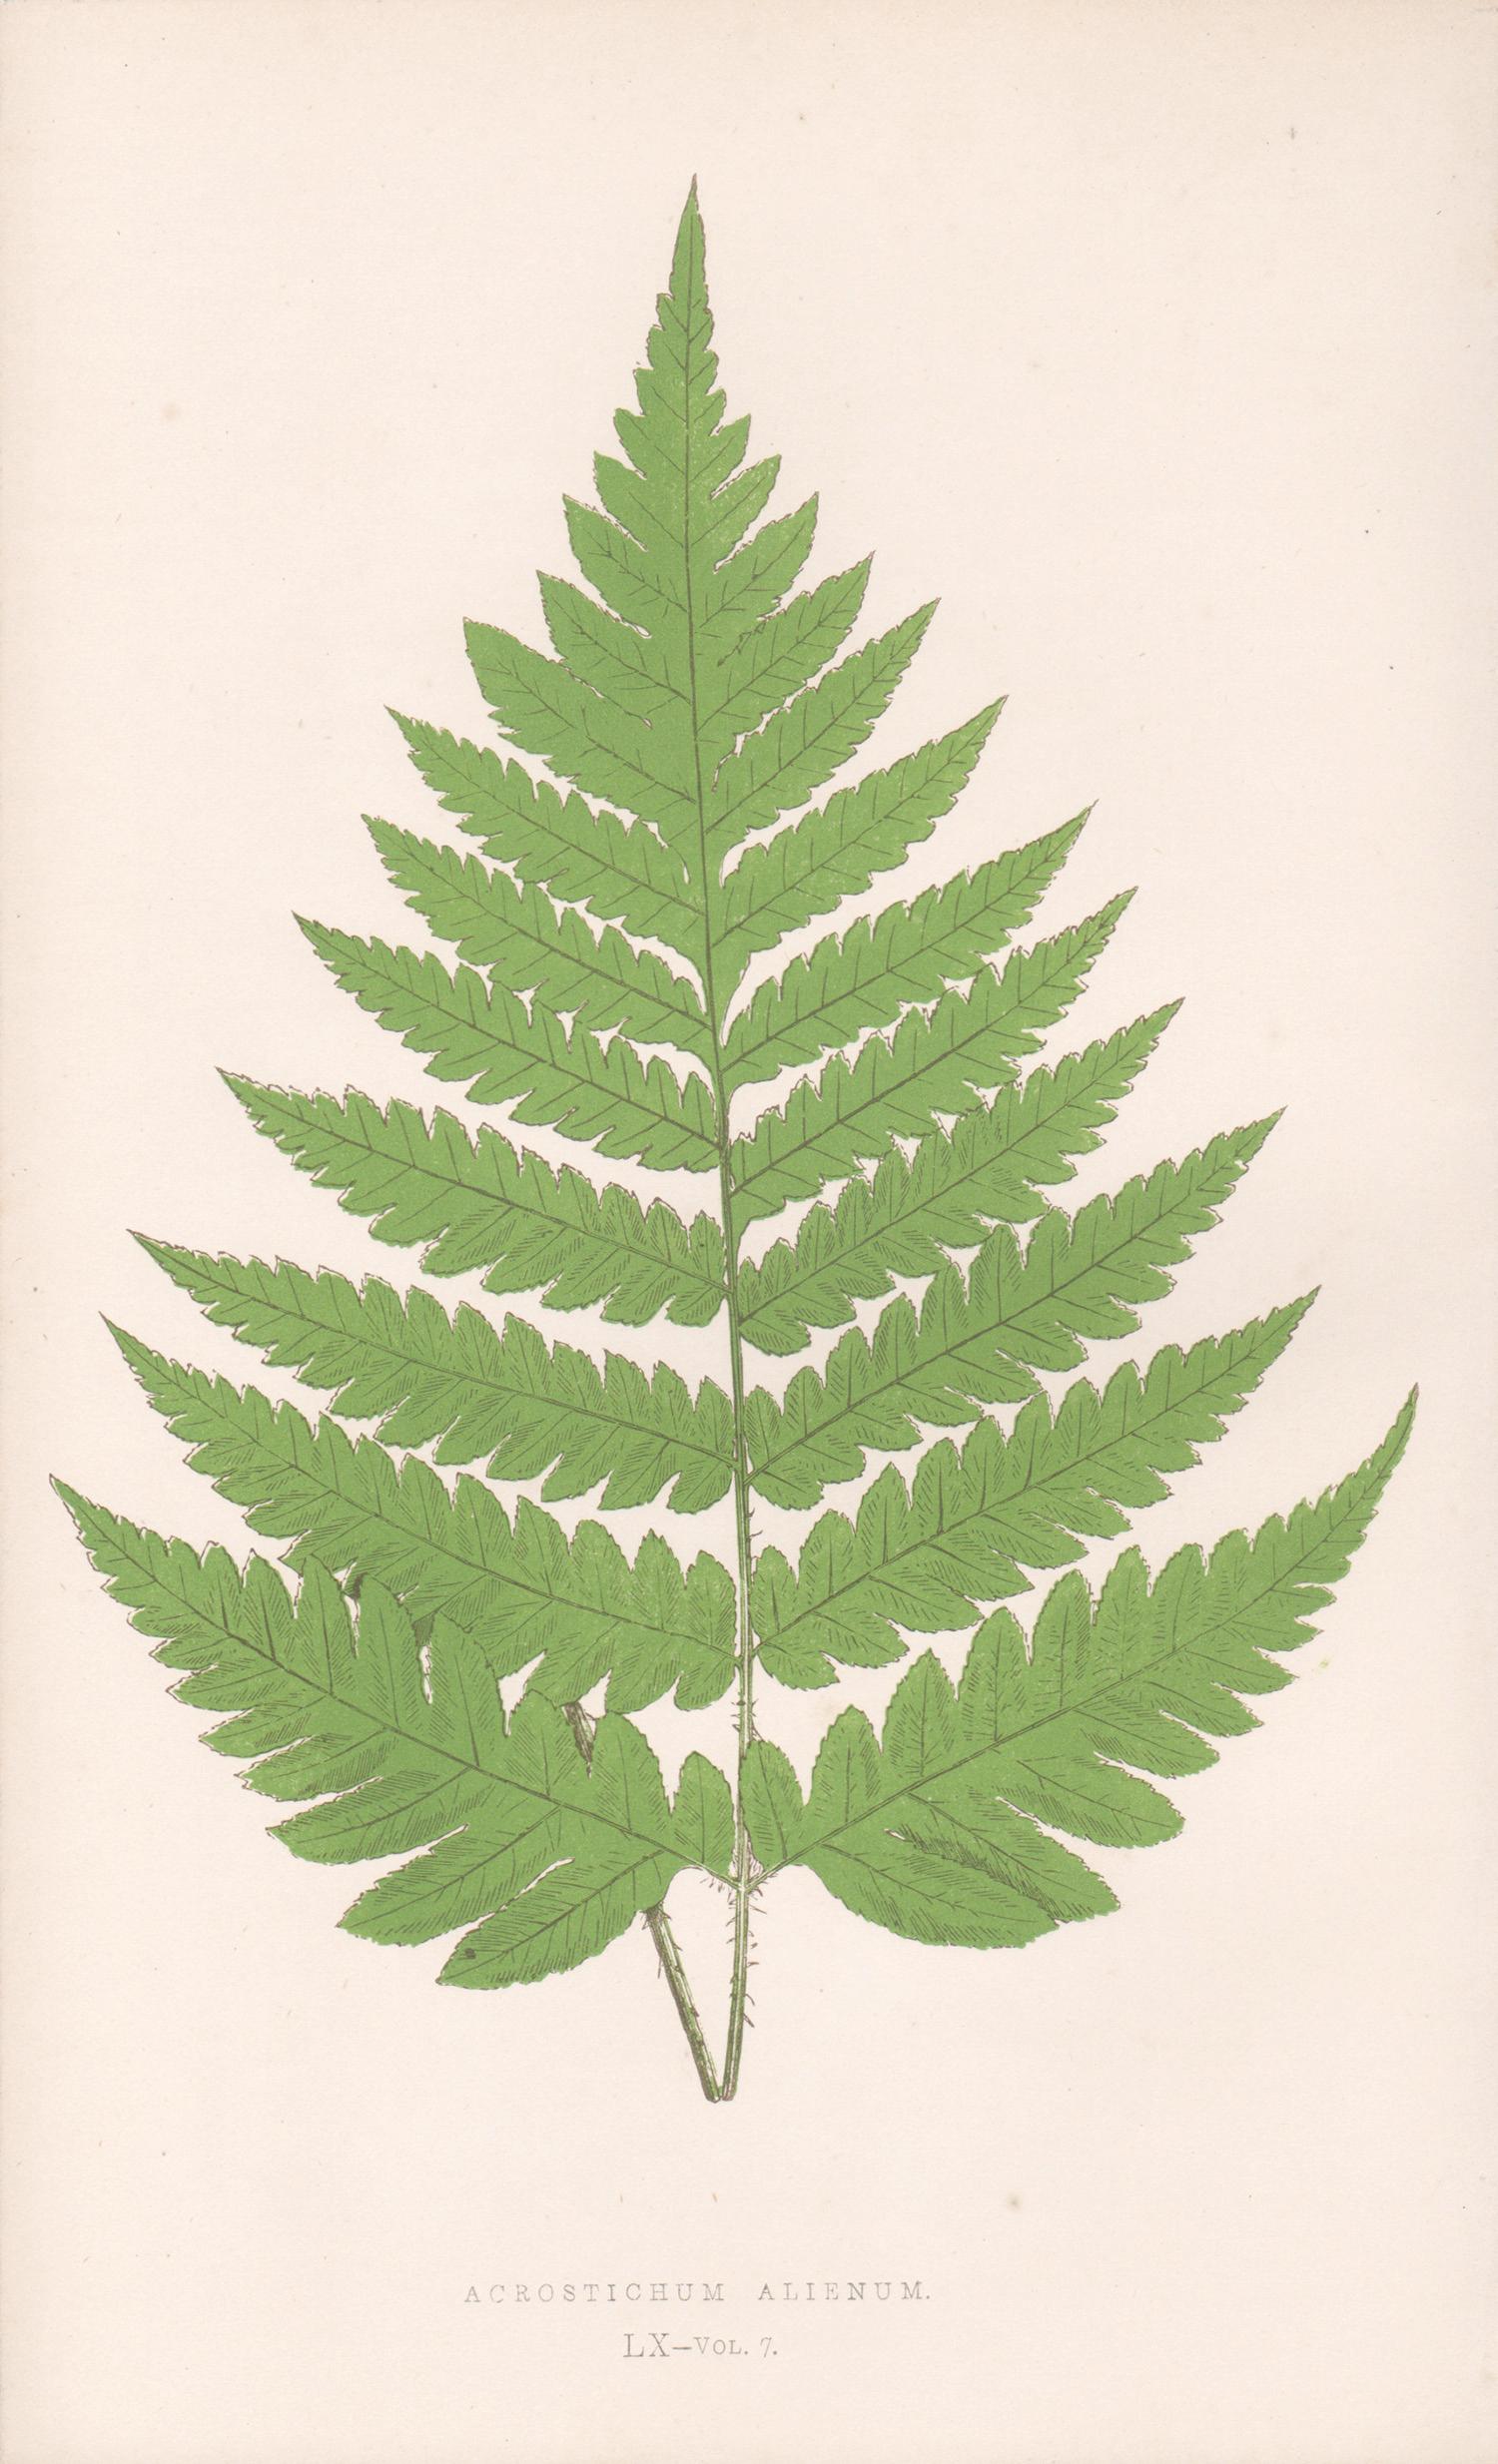 Benjamin Fawcett Still-Life Print - Ferns - Acrostichum Alienum, antique fern botanical woodblock print